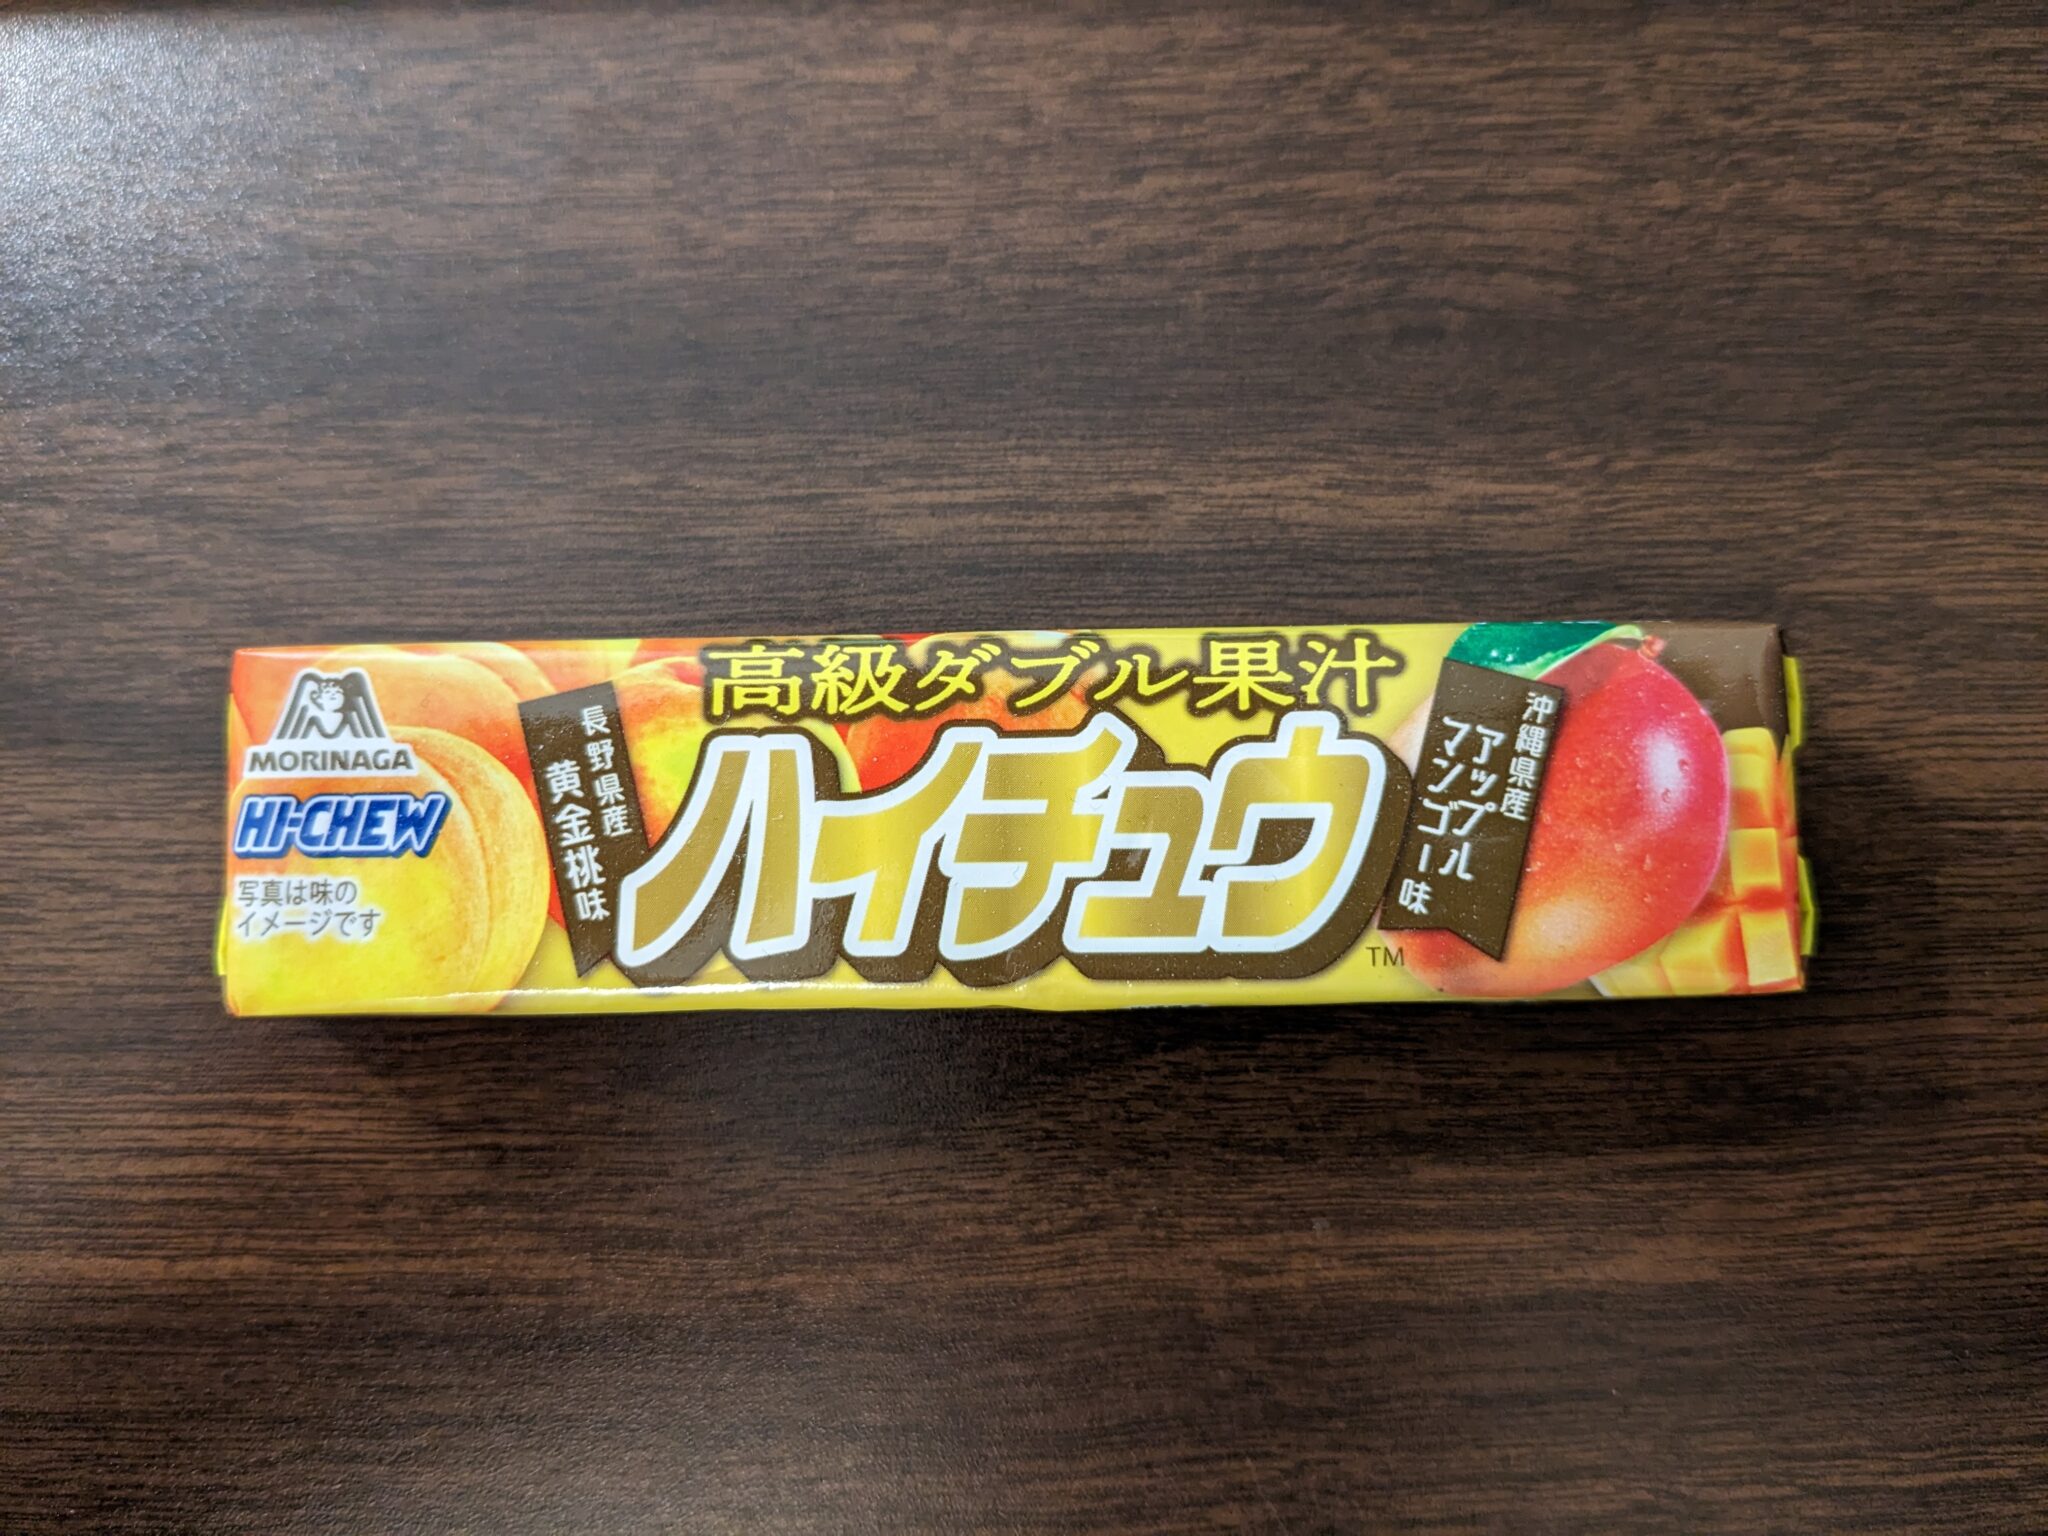 Hi-Chew Doubles – Golden Peach and Mango